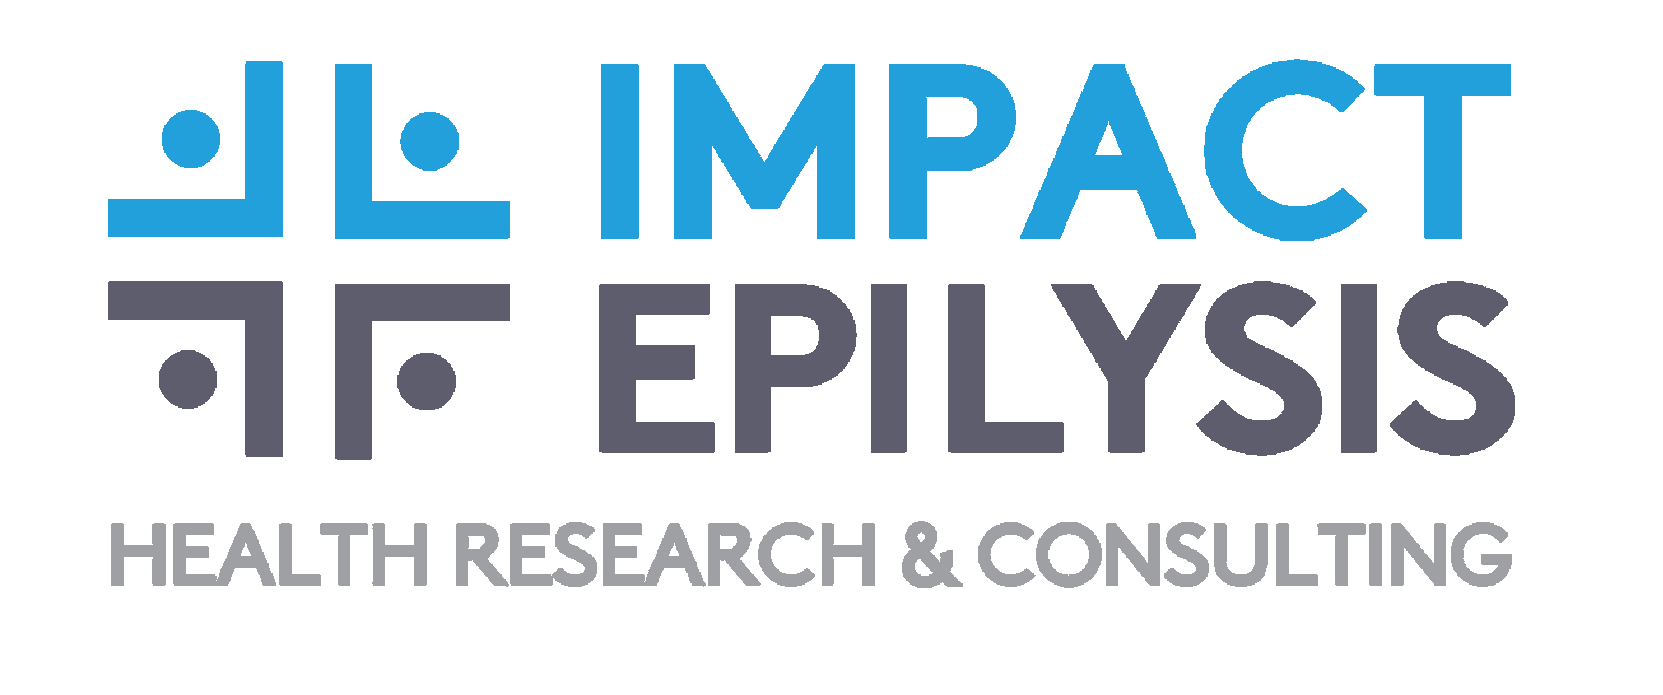 Impact Epilysis